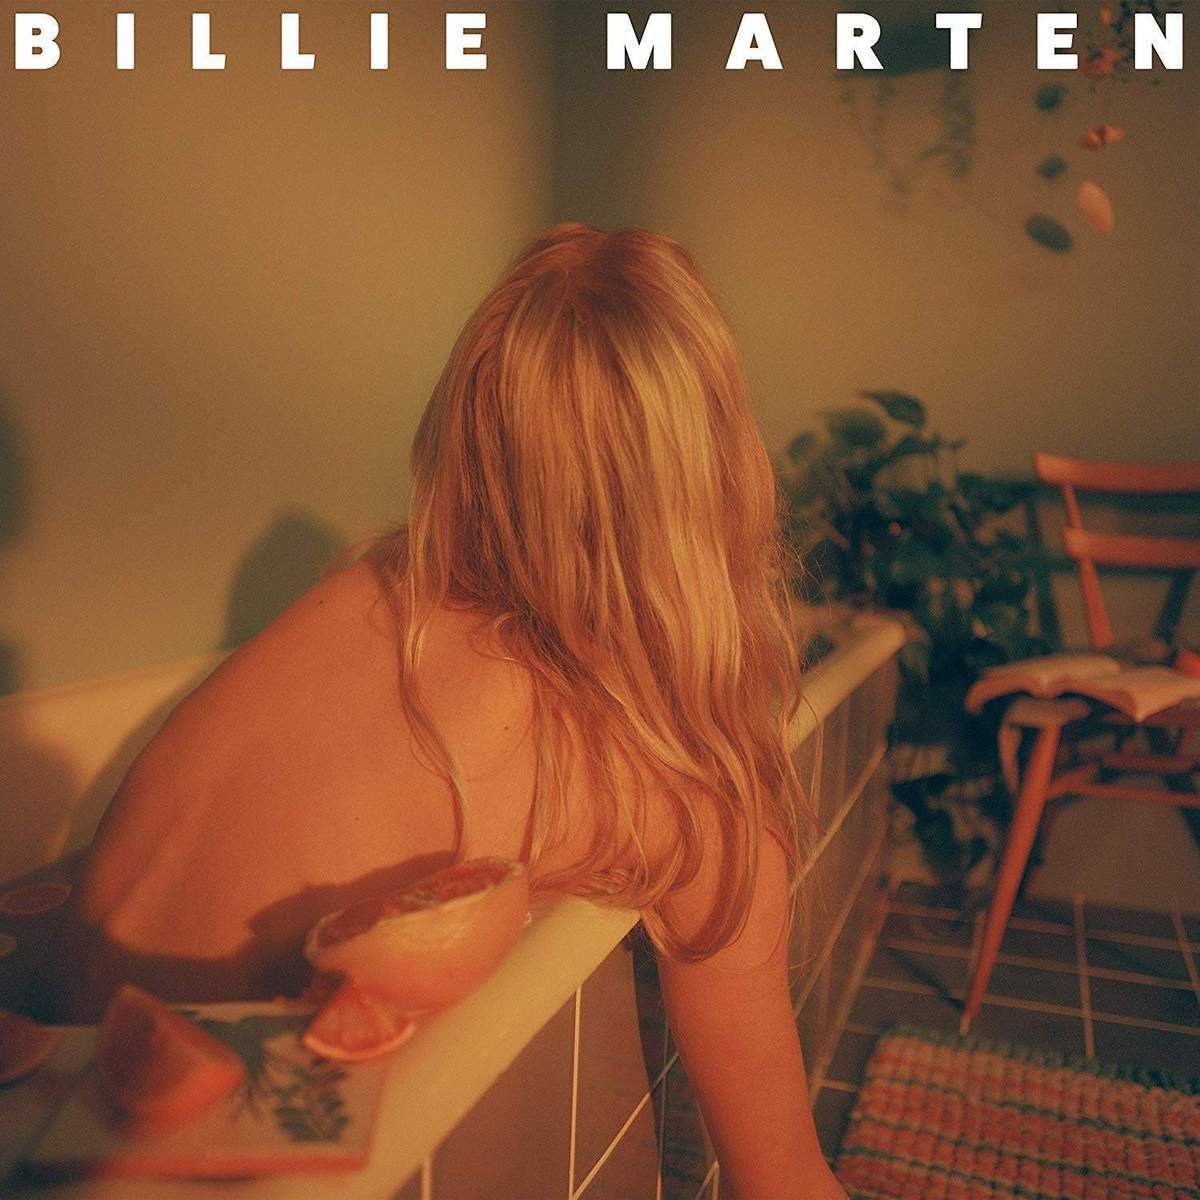 PRE-ORDER: 'Feeding Seahorses By Hand' by Billie Marten Billie Marten's 2019 album returns to vinyl as a limited-to-750 heavyweight coloured edish. @BillieMarten normanrecords.com/records/175977…